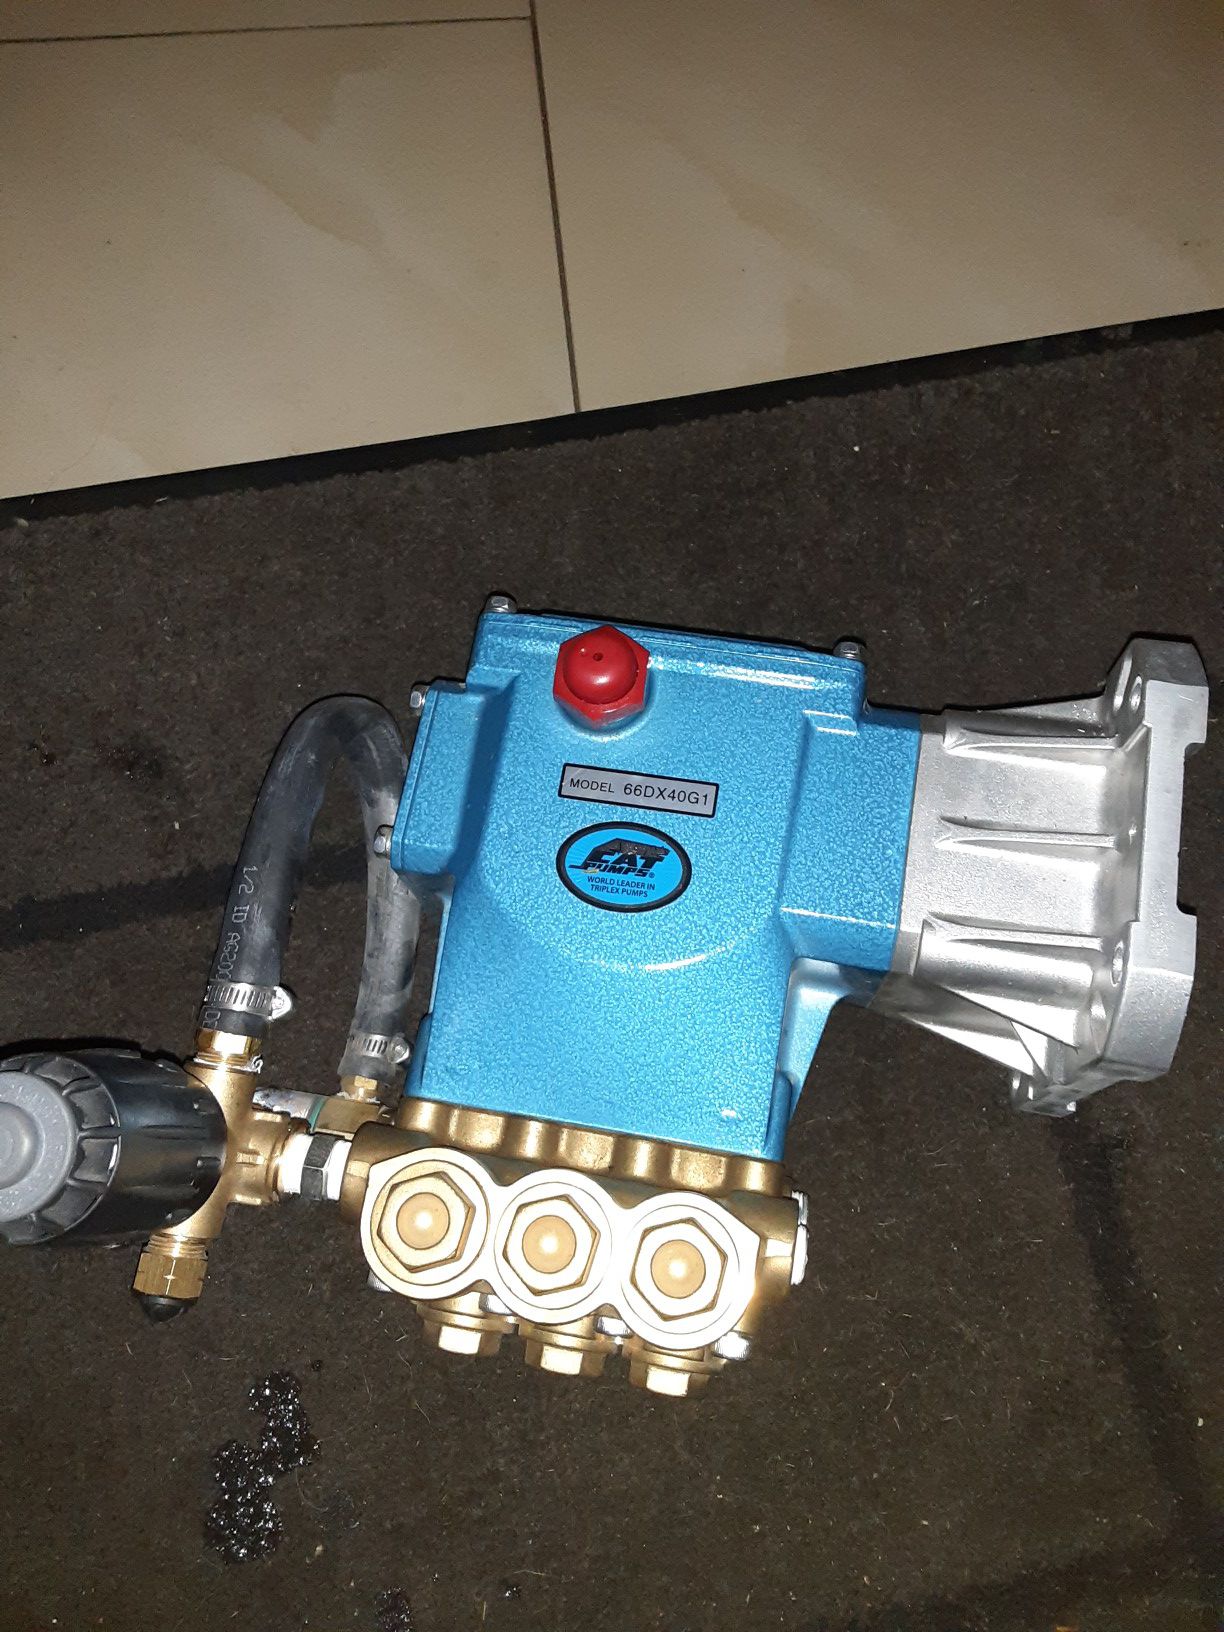 Pressure washer Pump cat 66dx40